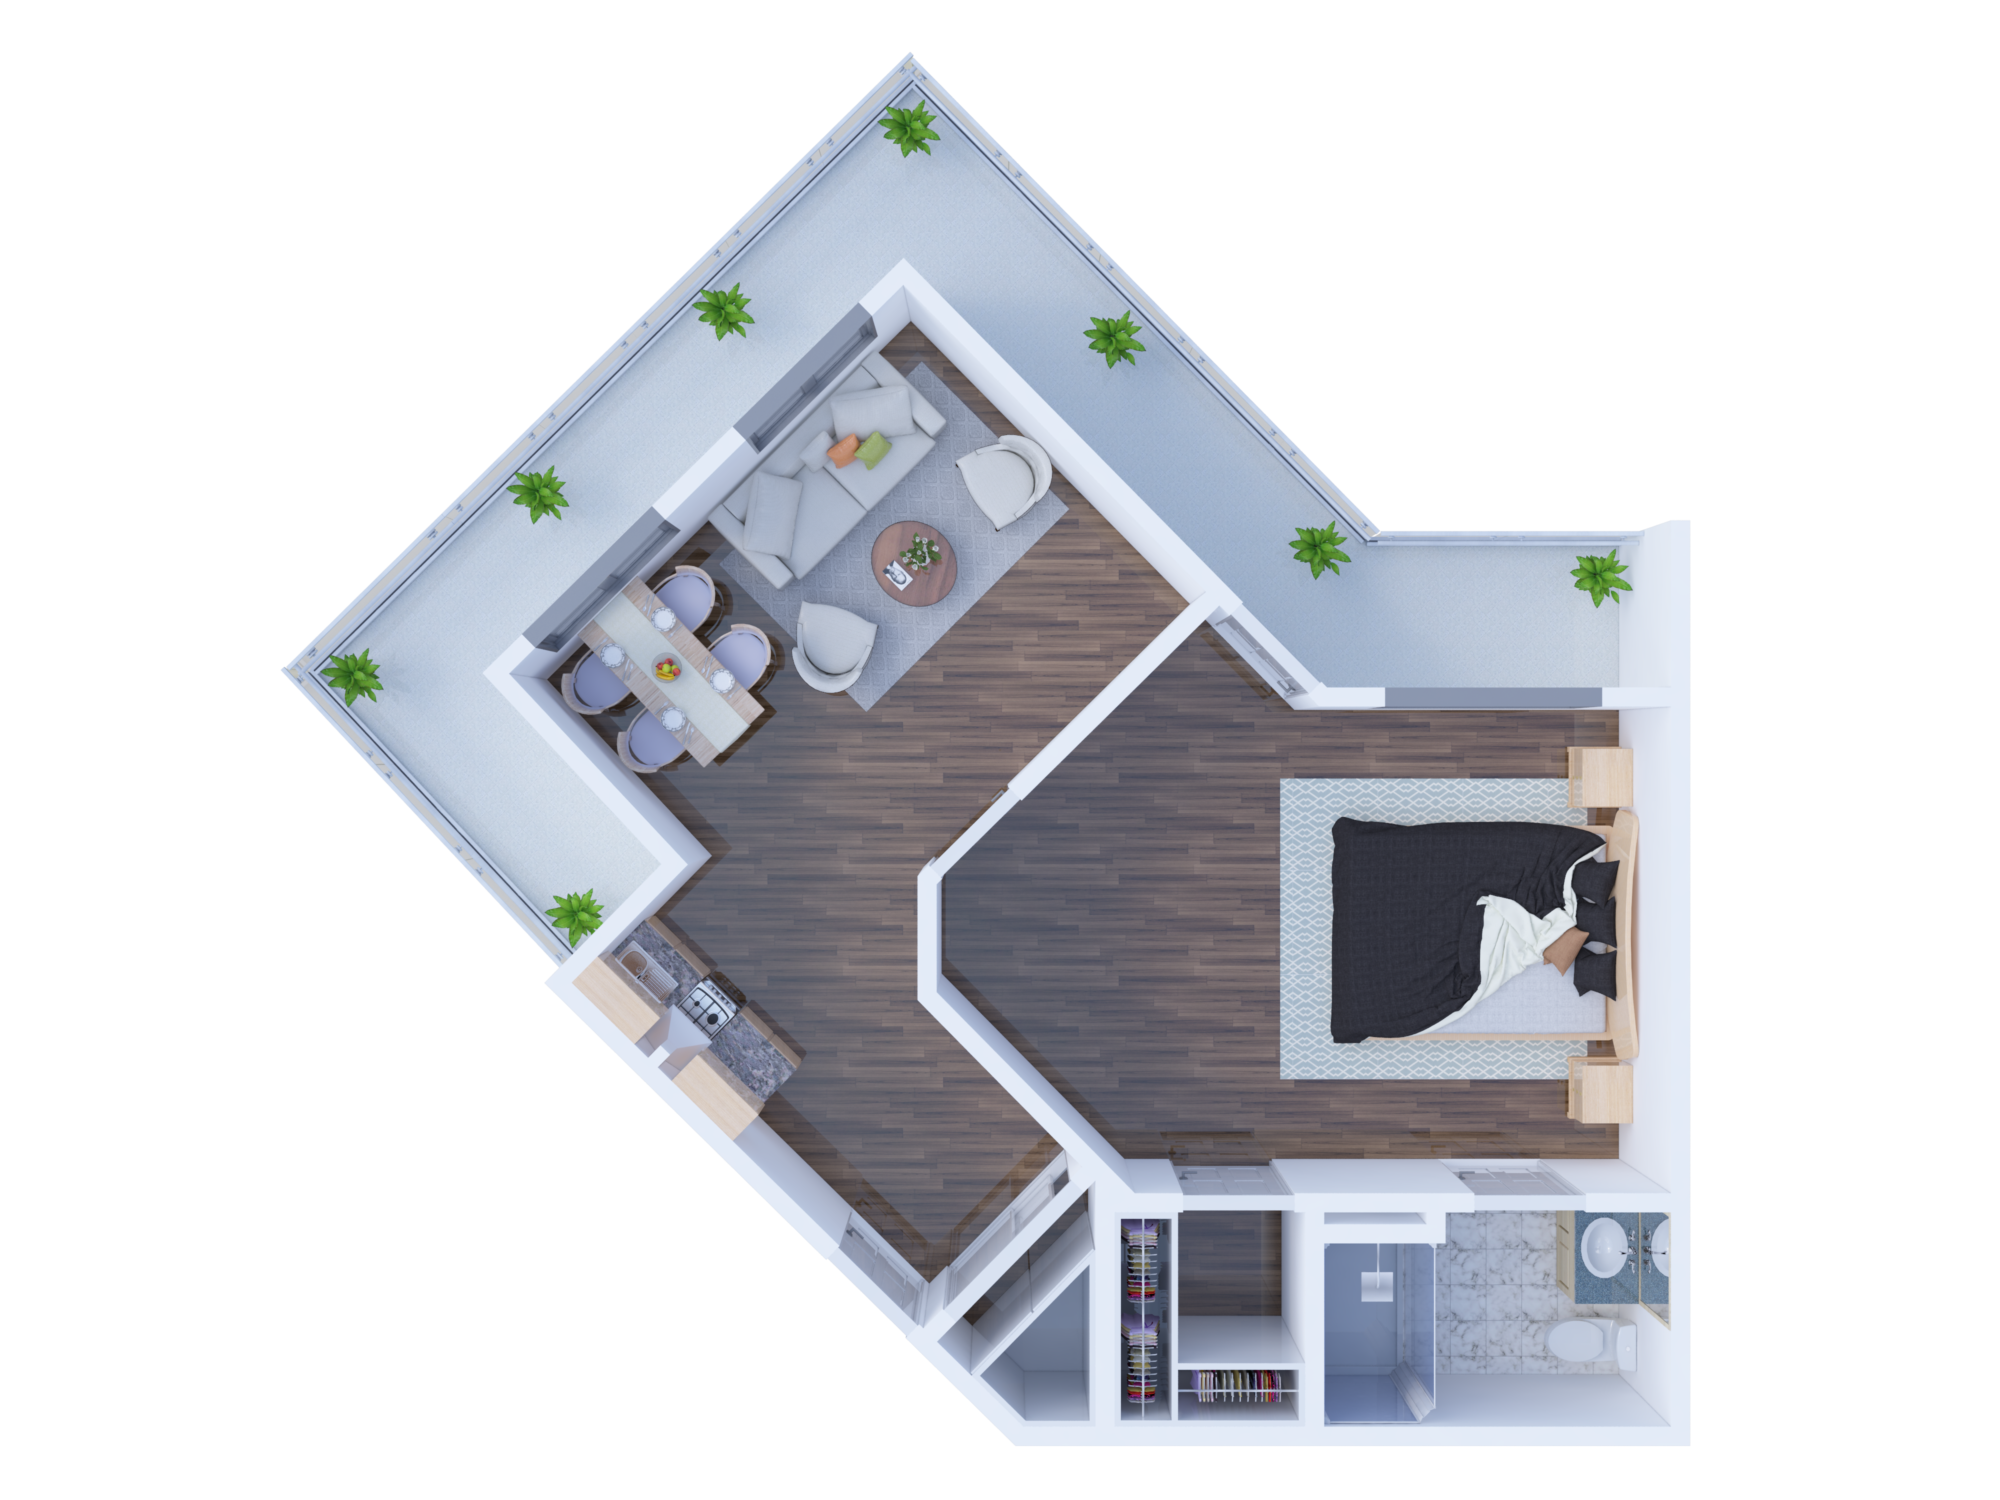 B5 floor plan